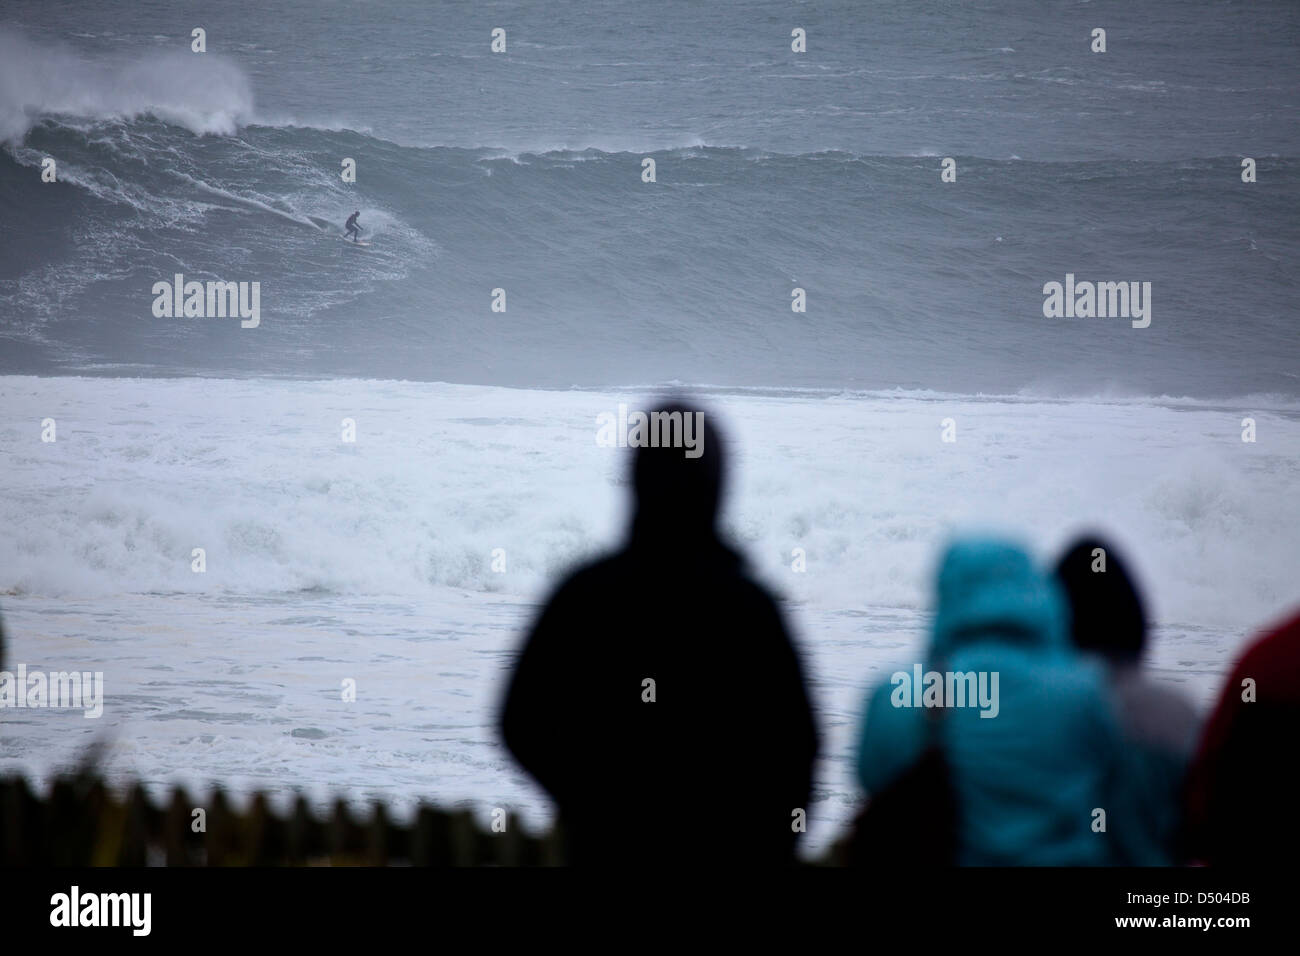 People watching big wave surfing at Mullaghmore Head, County Sligo, Ireland. Stock Photo